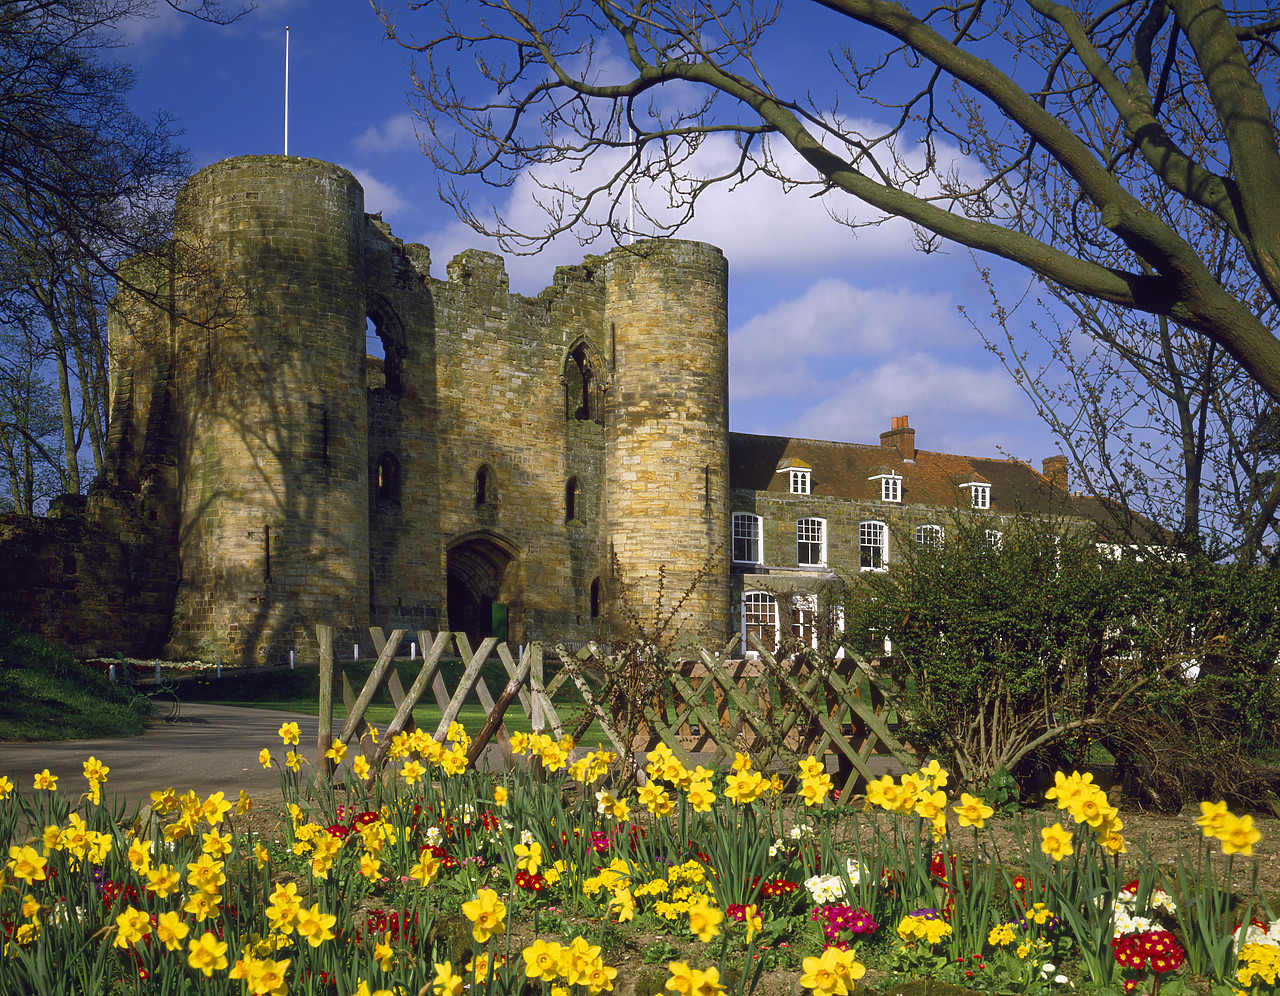 #87829-2 - Tonbridge Castle in Spring, Kent, England